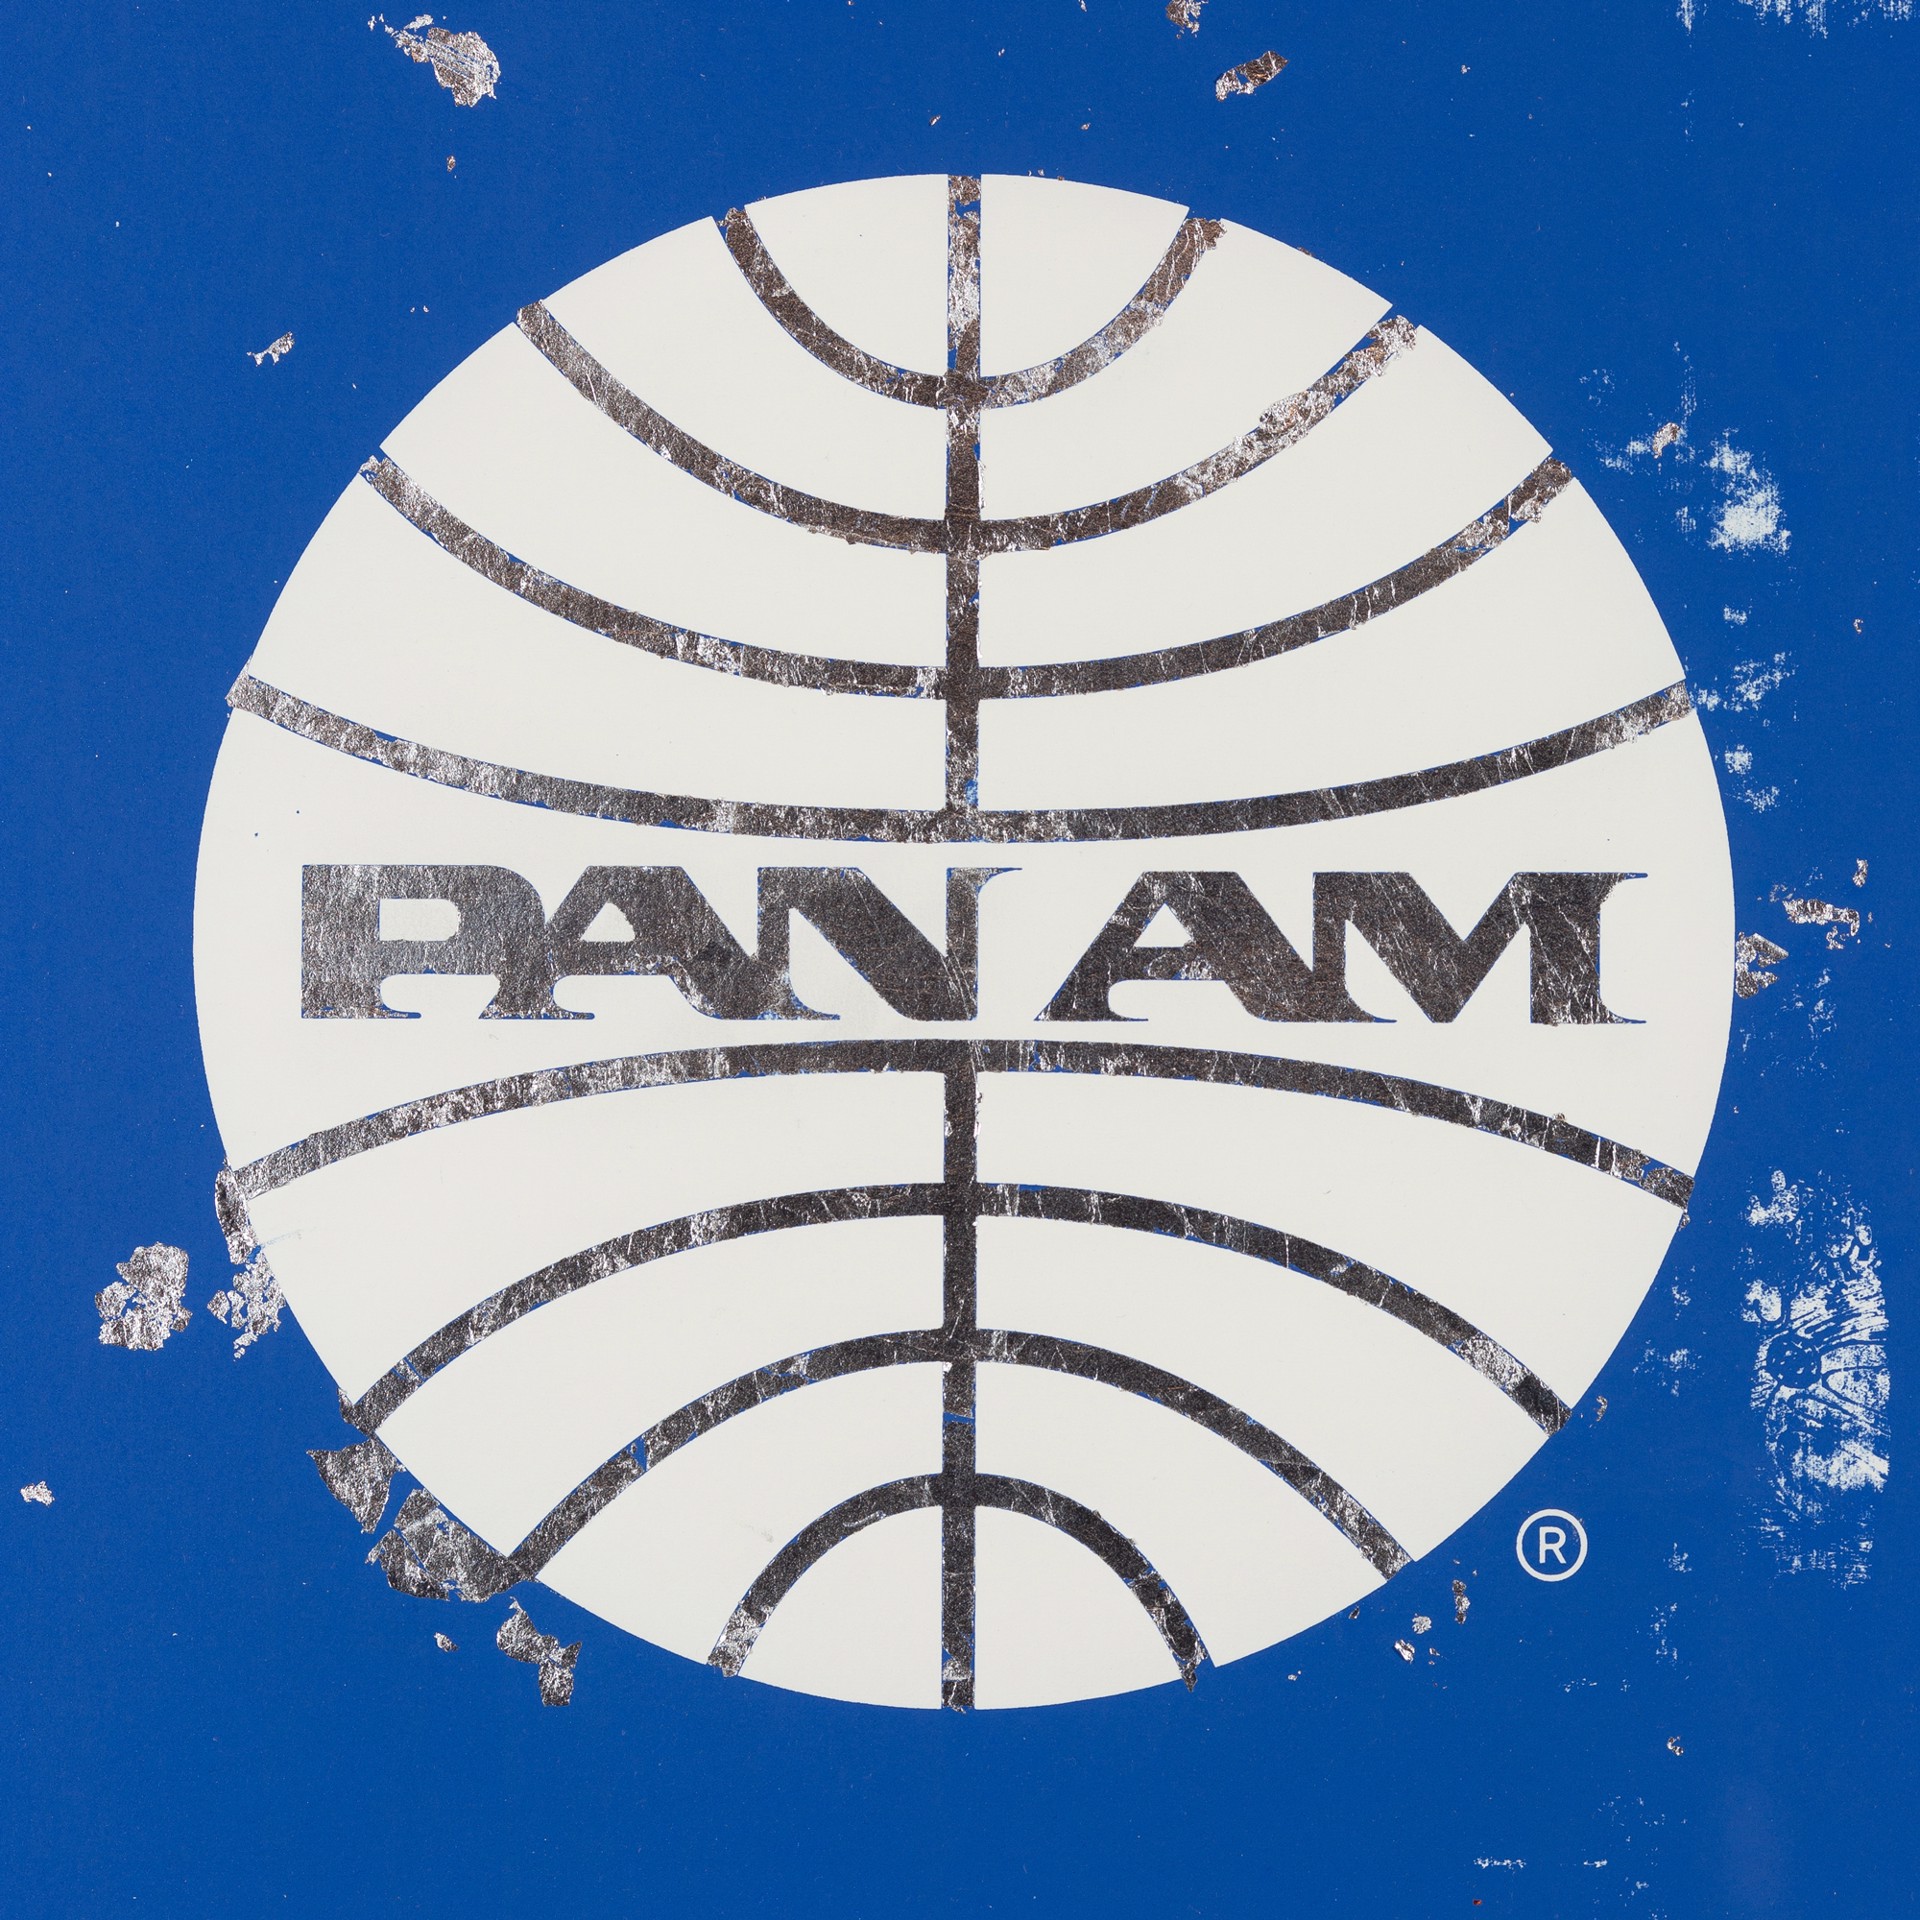 Pan Am (Flag Series) by Cey Adams